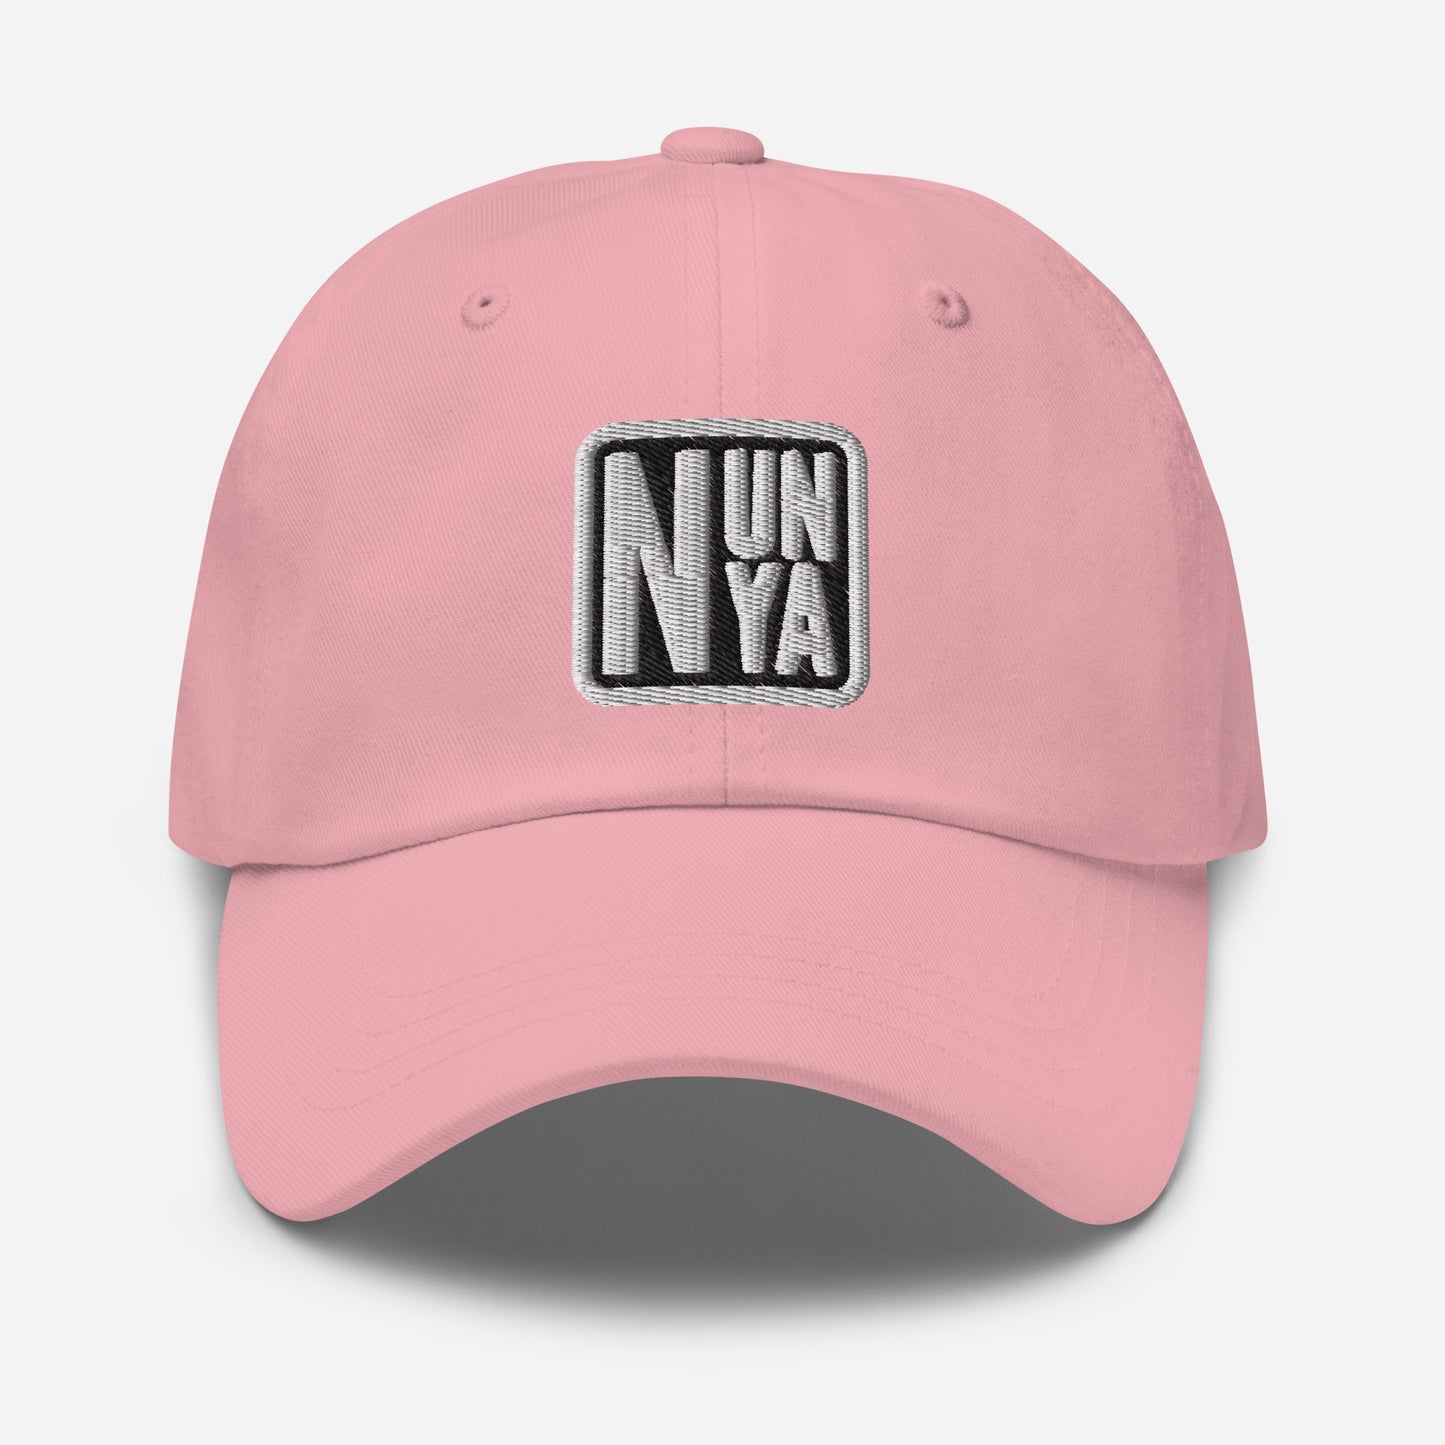 Nunya (W) Dad hat